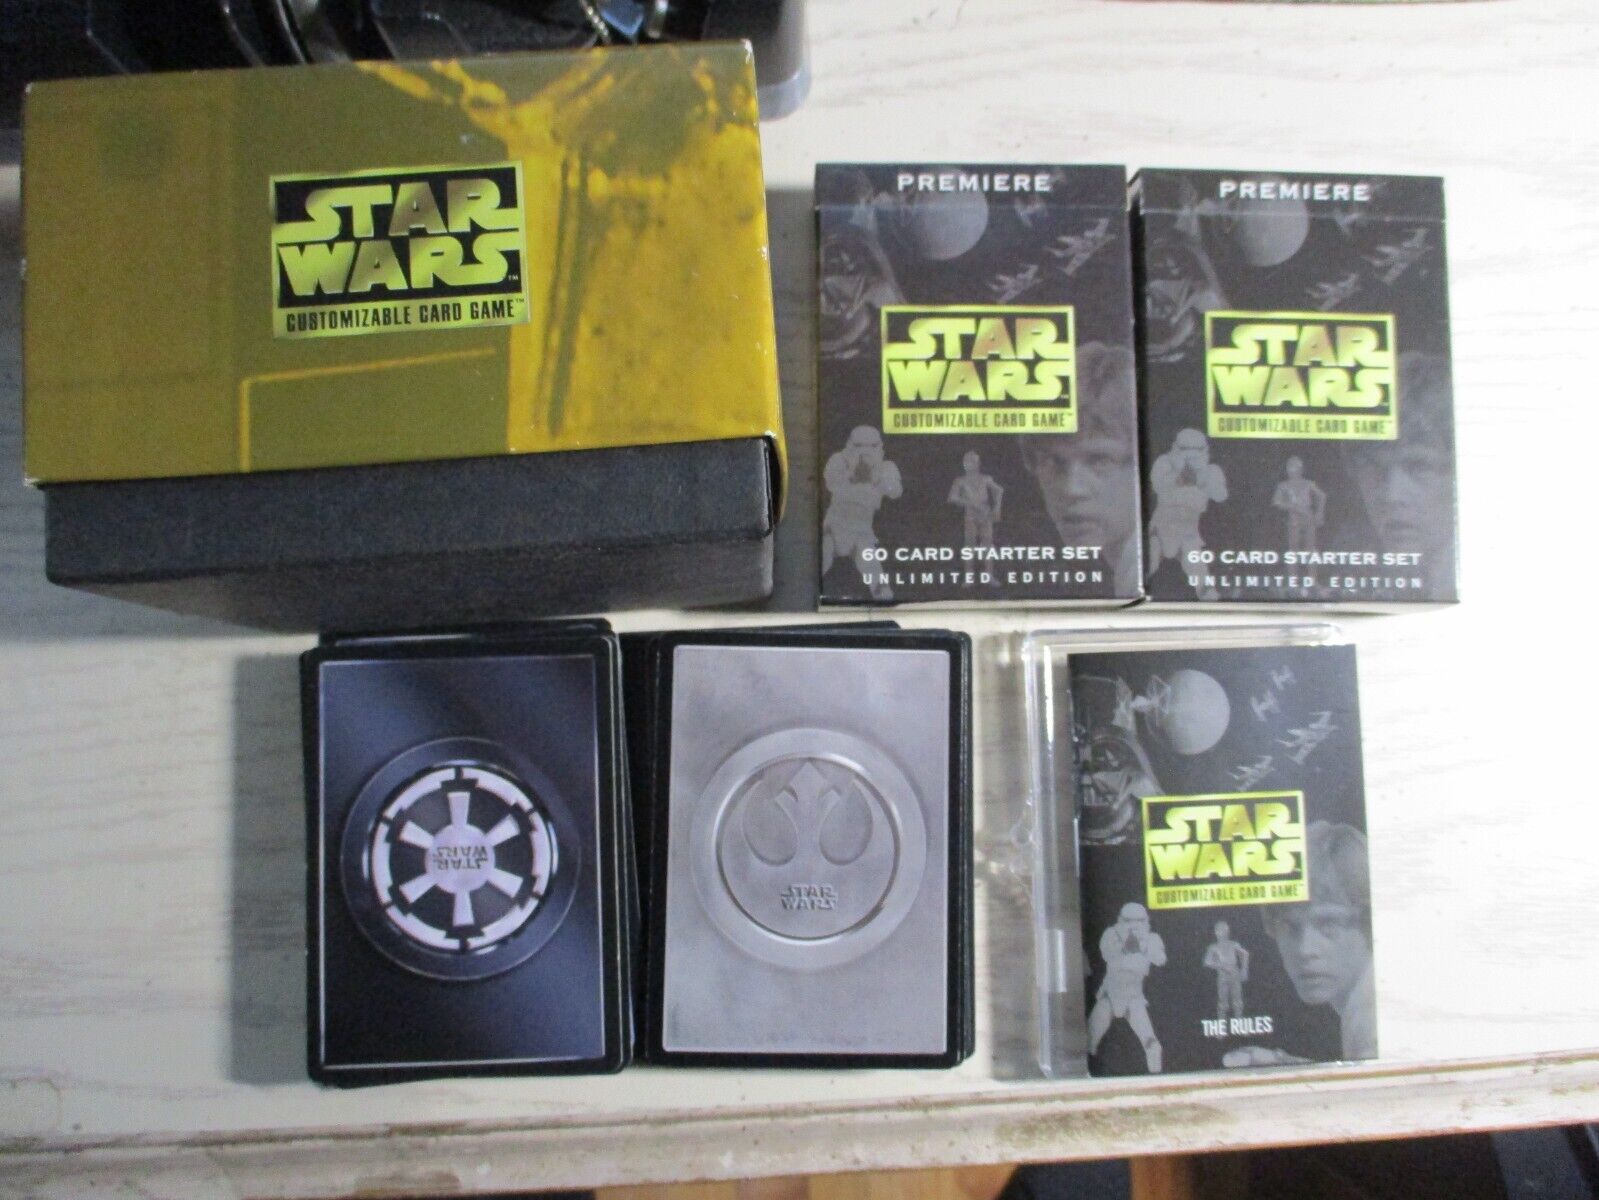 1998 Star Wars customizable card game set w/2 decks 2  Premiere Starter Sets EUC